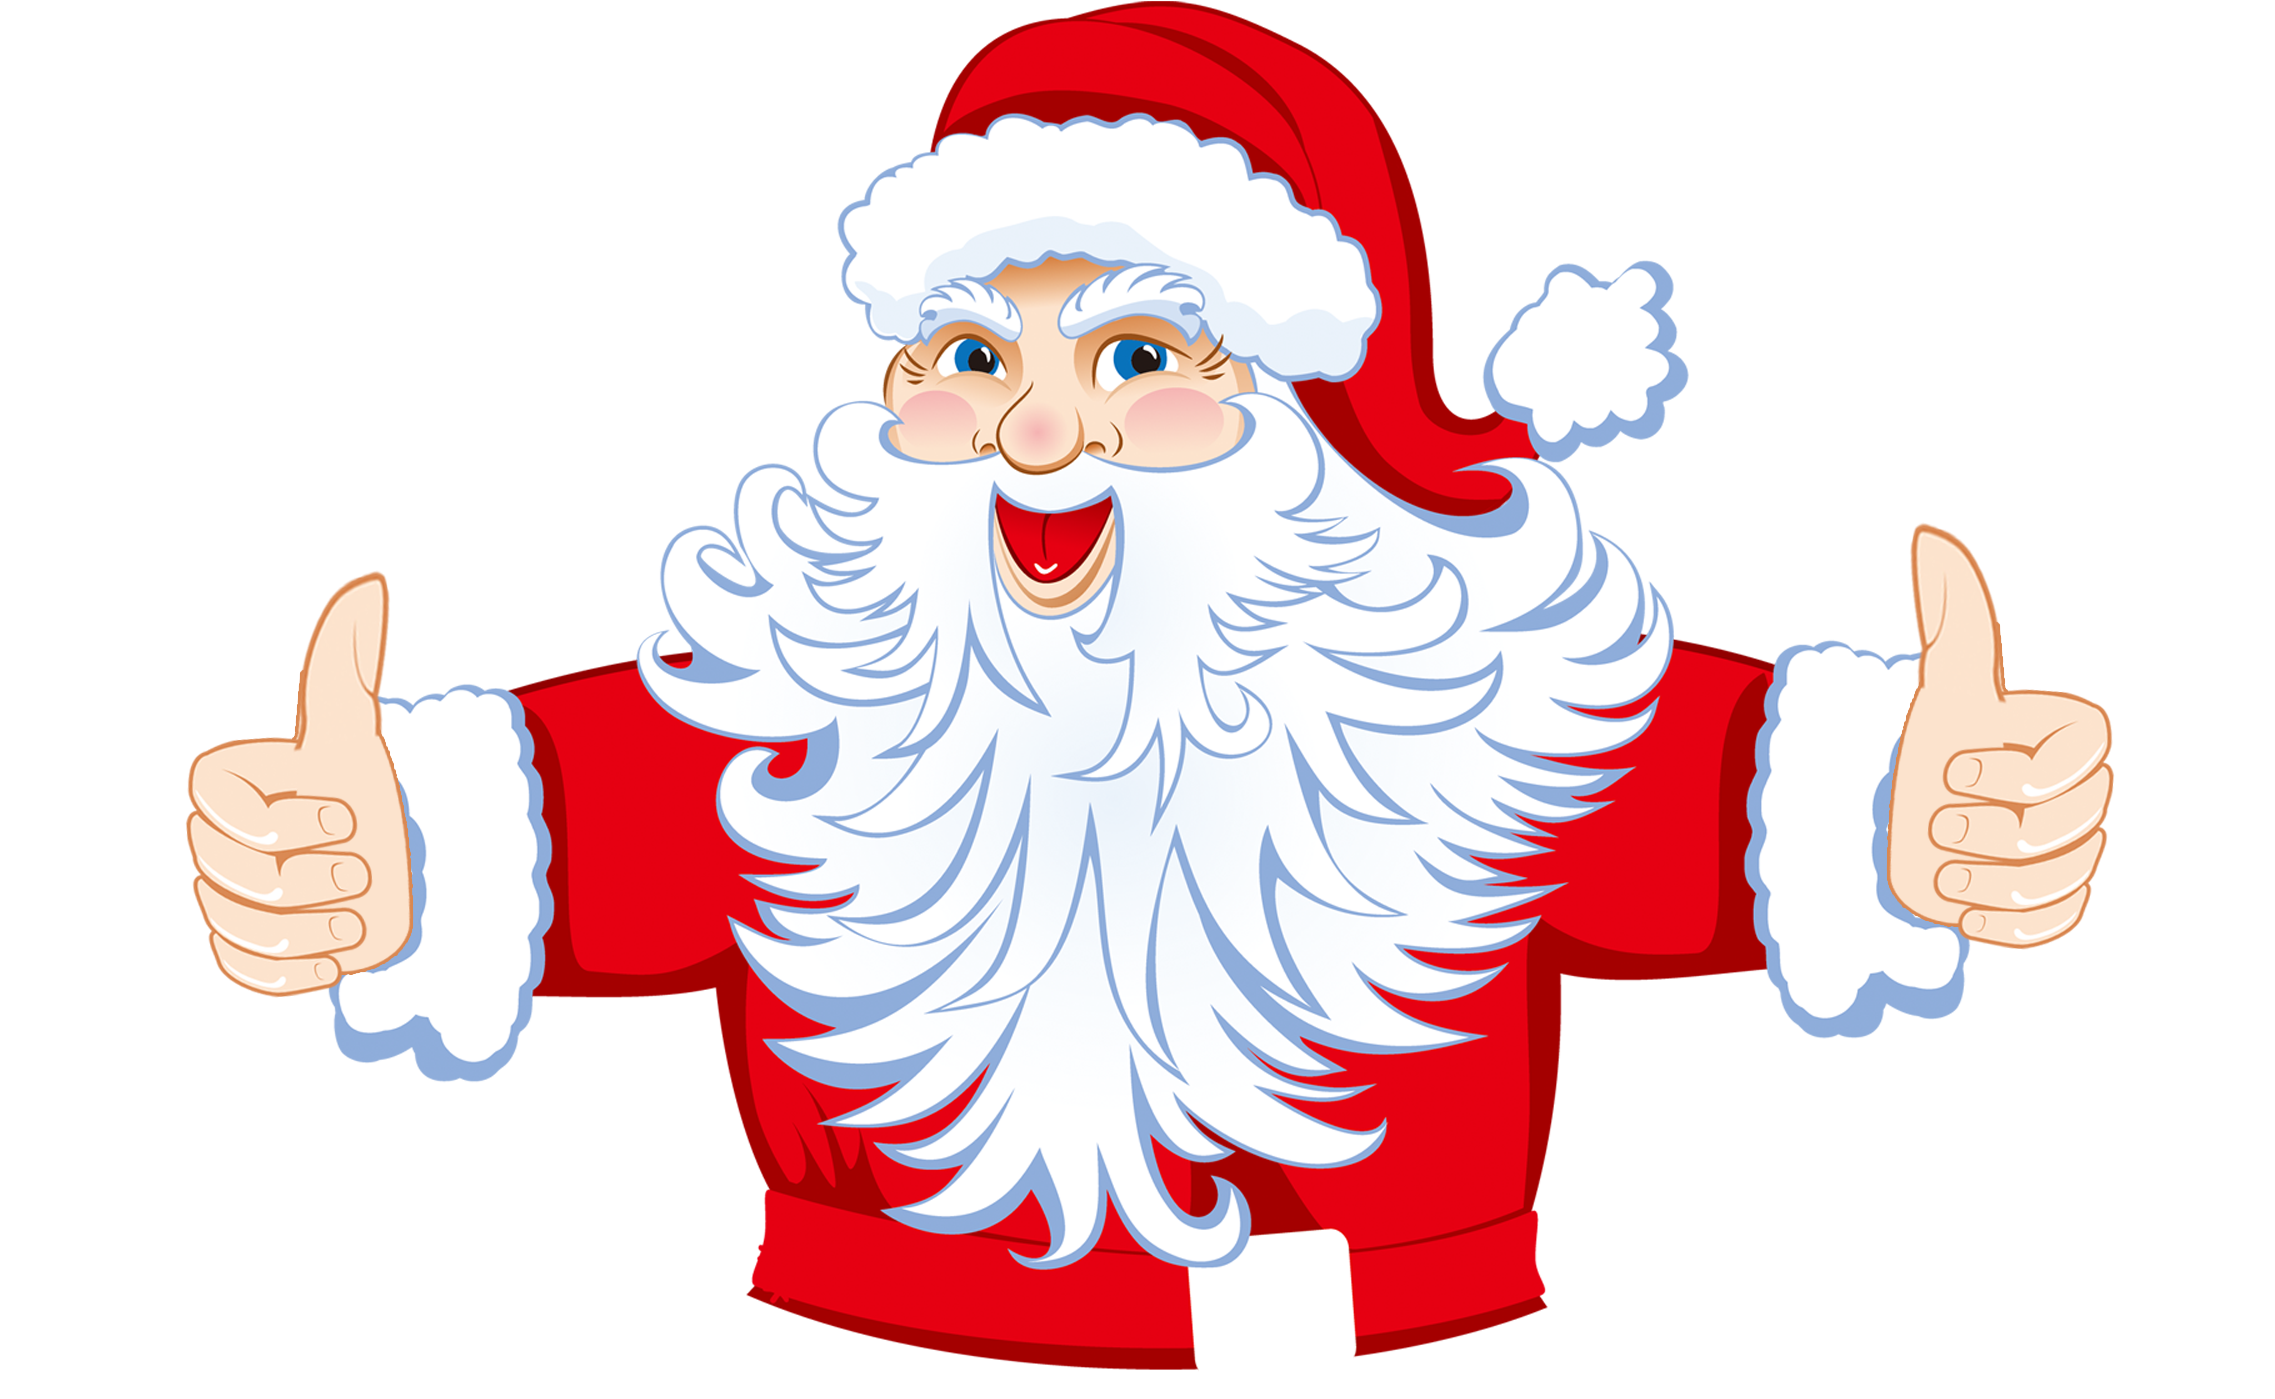 Santa Claus's Reindeer Christmas North Pole Clip Art - Santa Claus's Reindeer Christmas North Pole Clip Art (3000x3000)